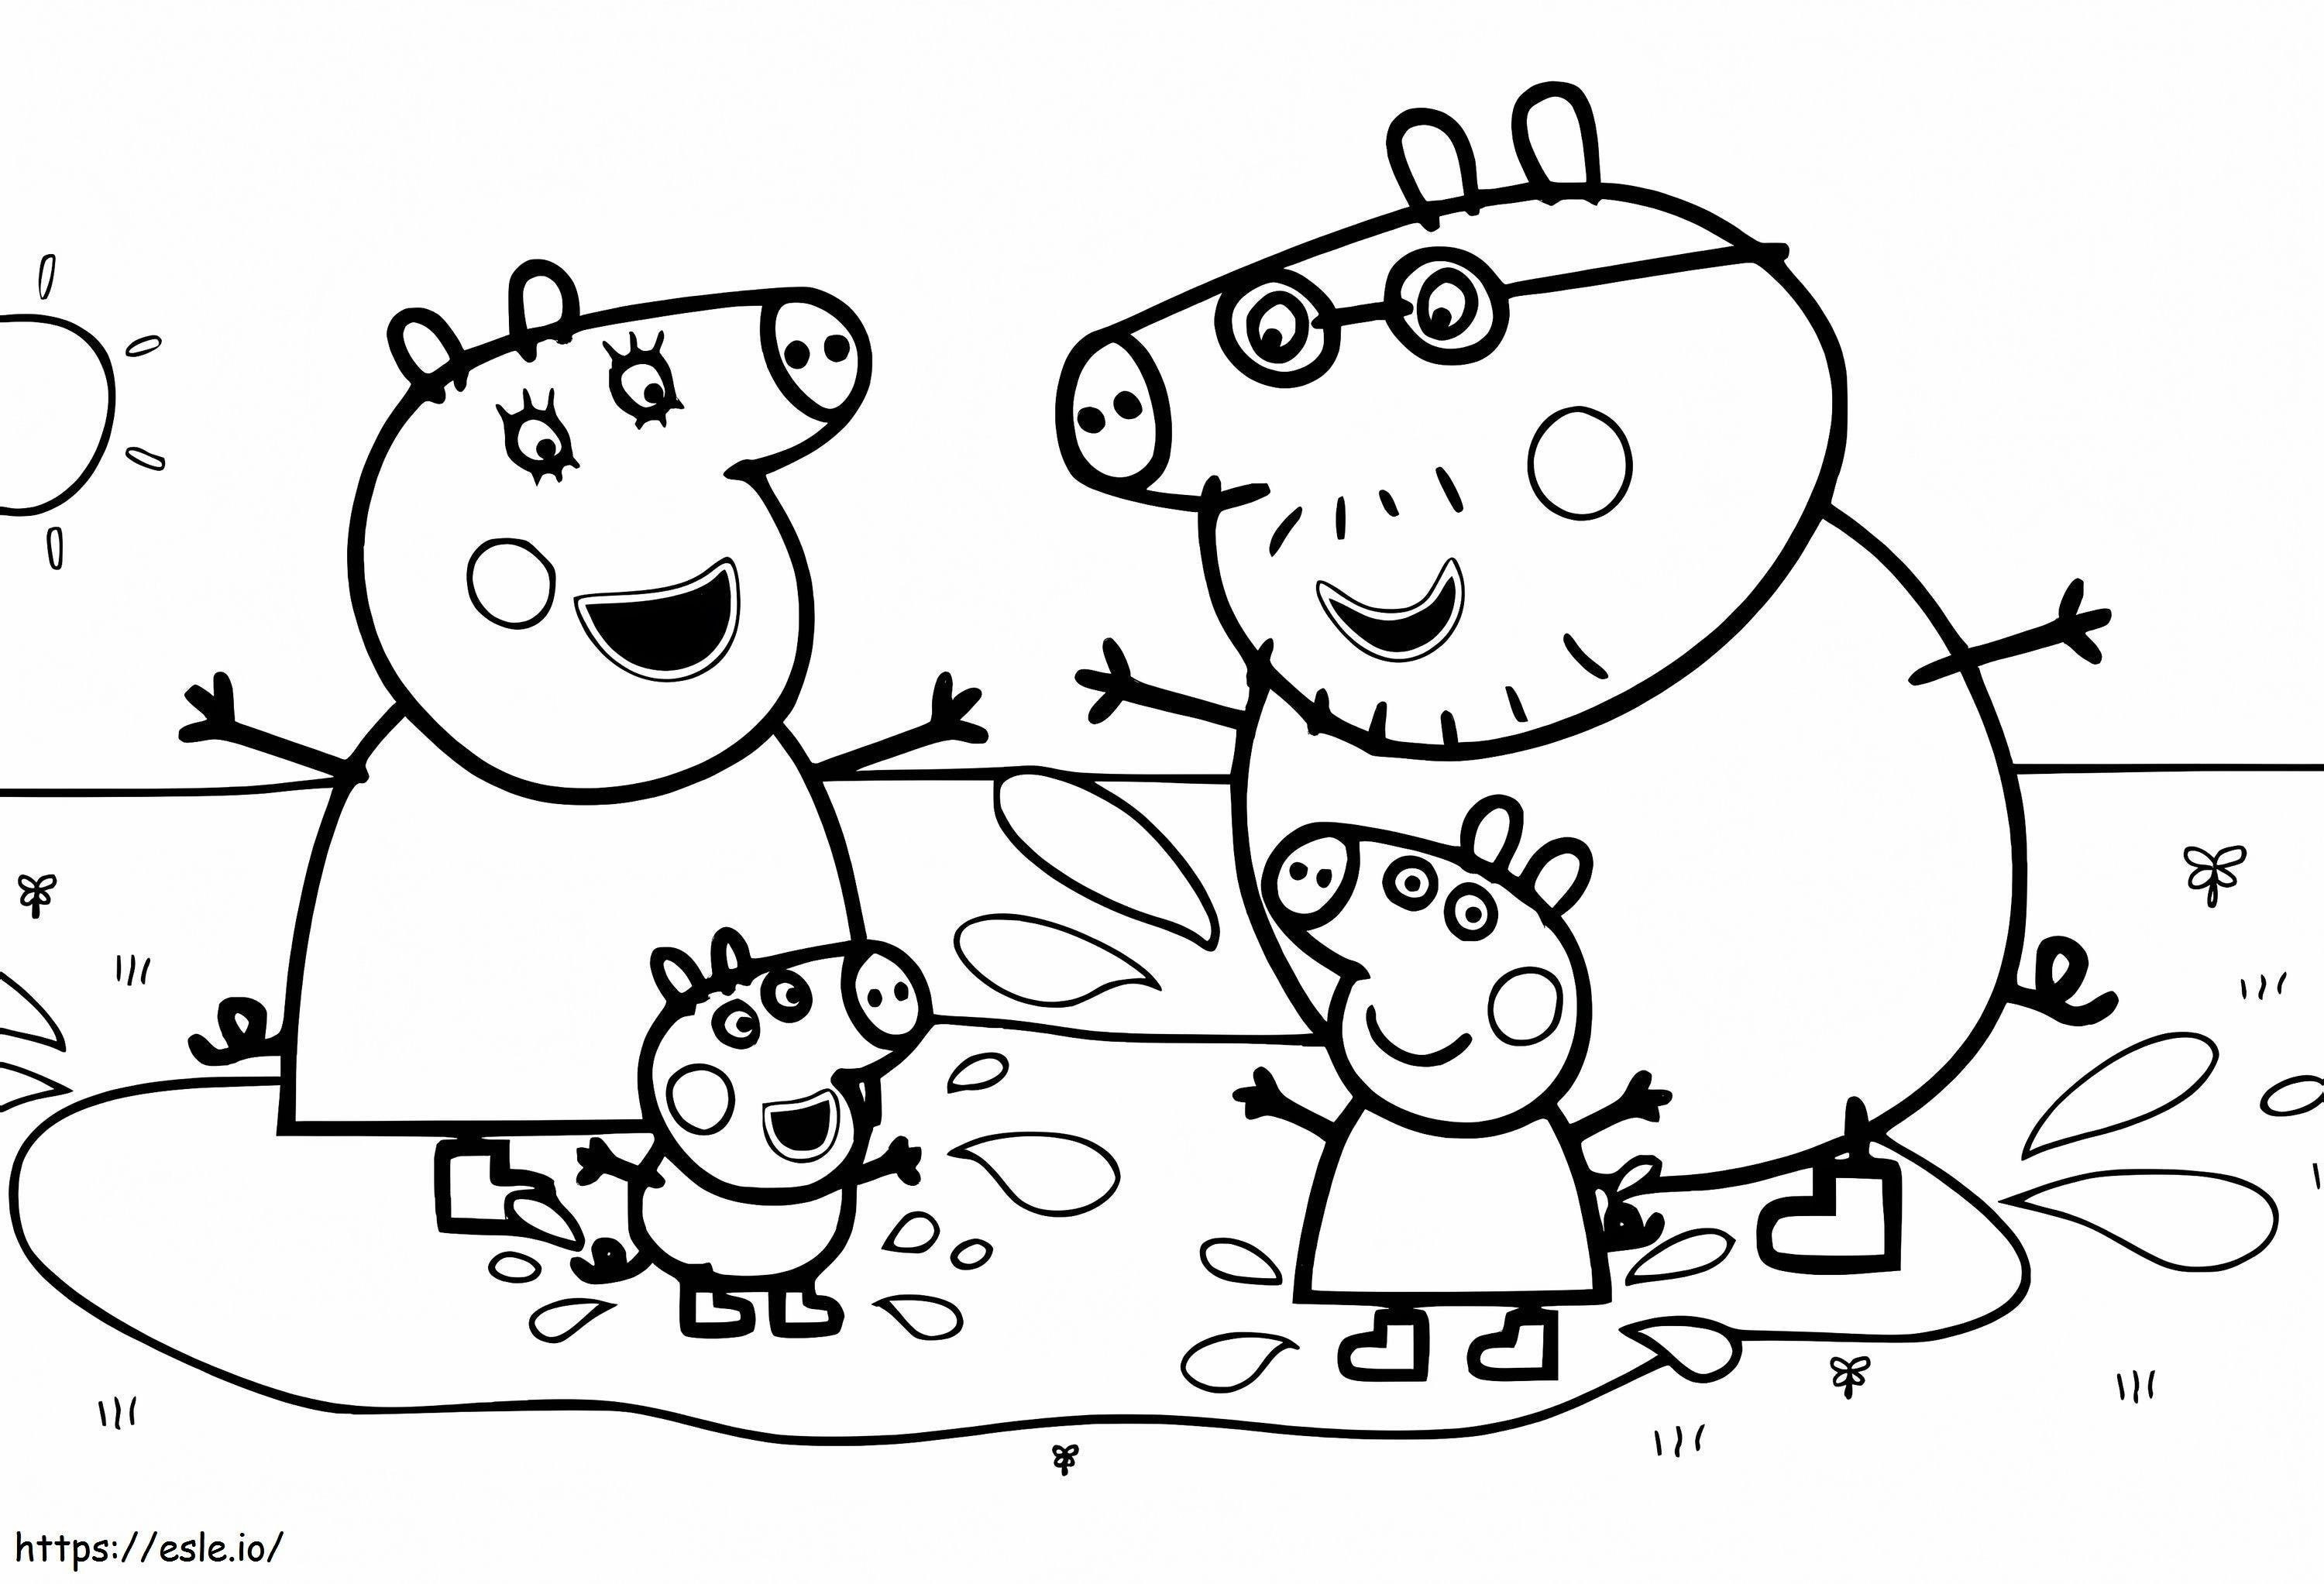 Peppa Pig Family Having Fun coloring page